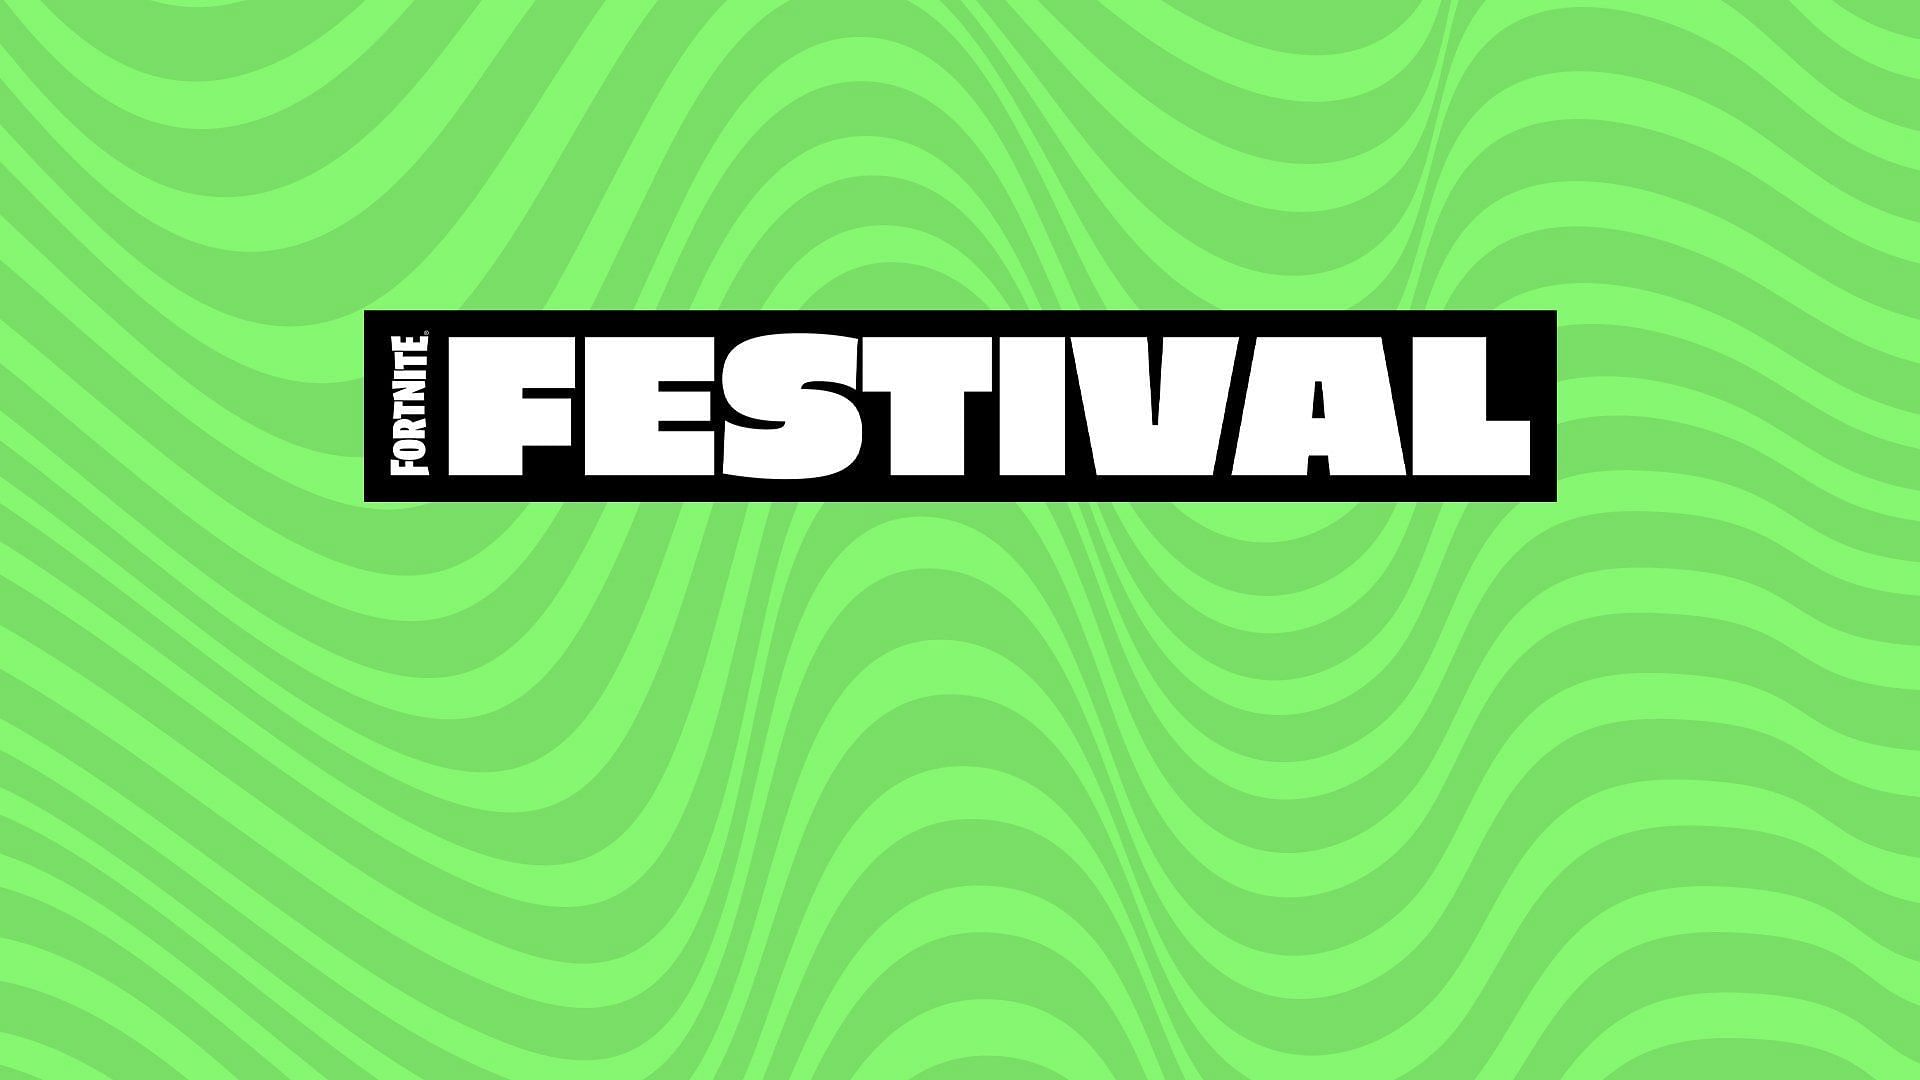 Fortnite Festival Season 3 could feature Billie Eilish (Image via Epic Games/Fortnite Festival)